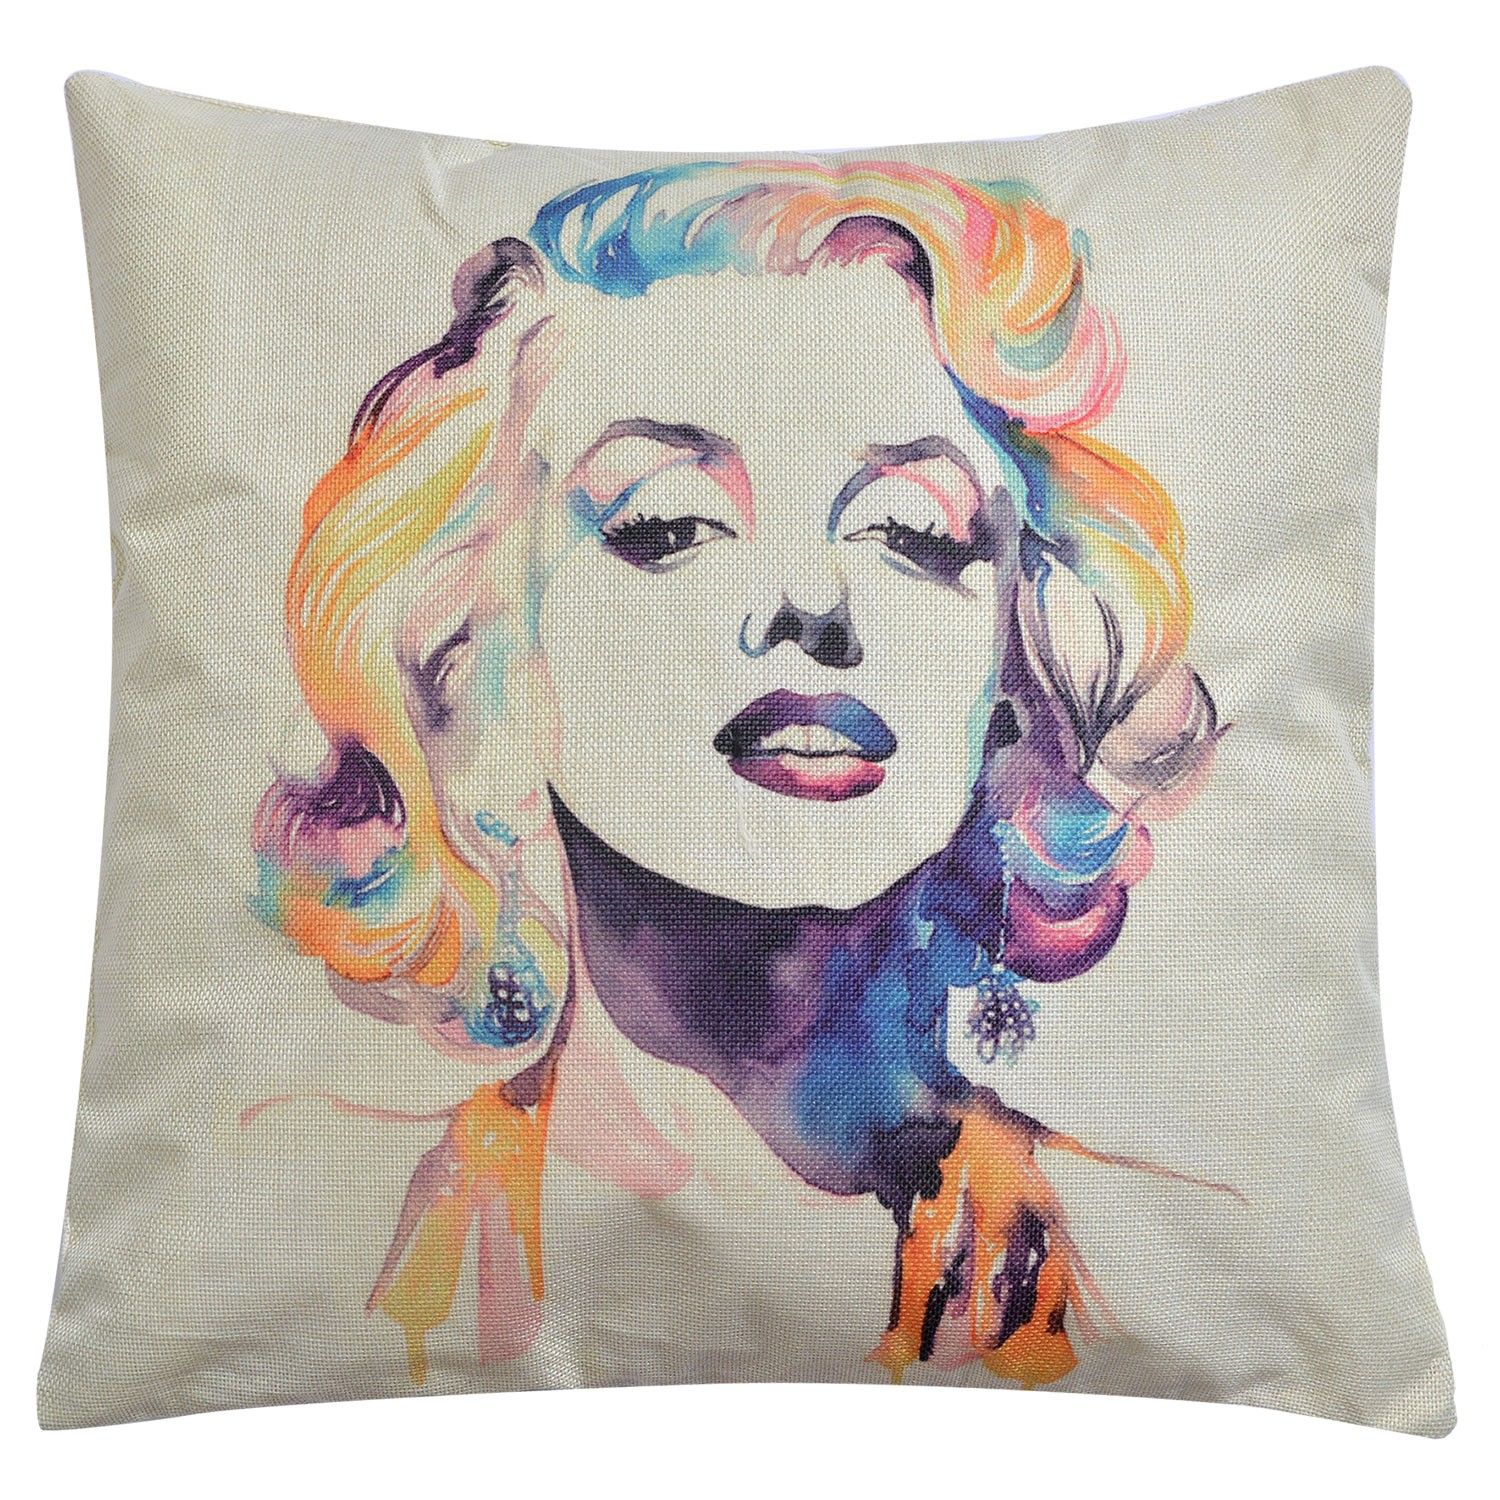 Dekorační polštář s portrétem Marilyn Monroe - 43*43 cm Clayre & Eef - LaHome - vintage dekorace